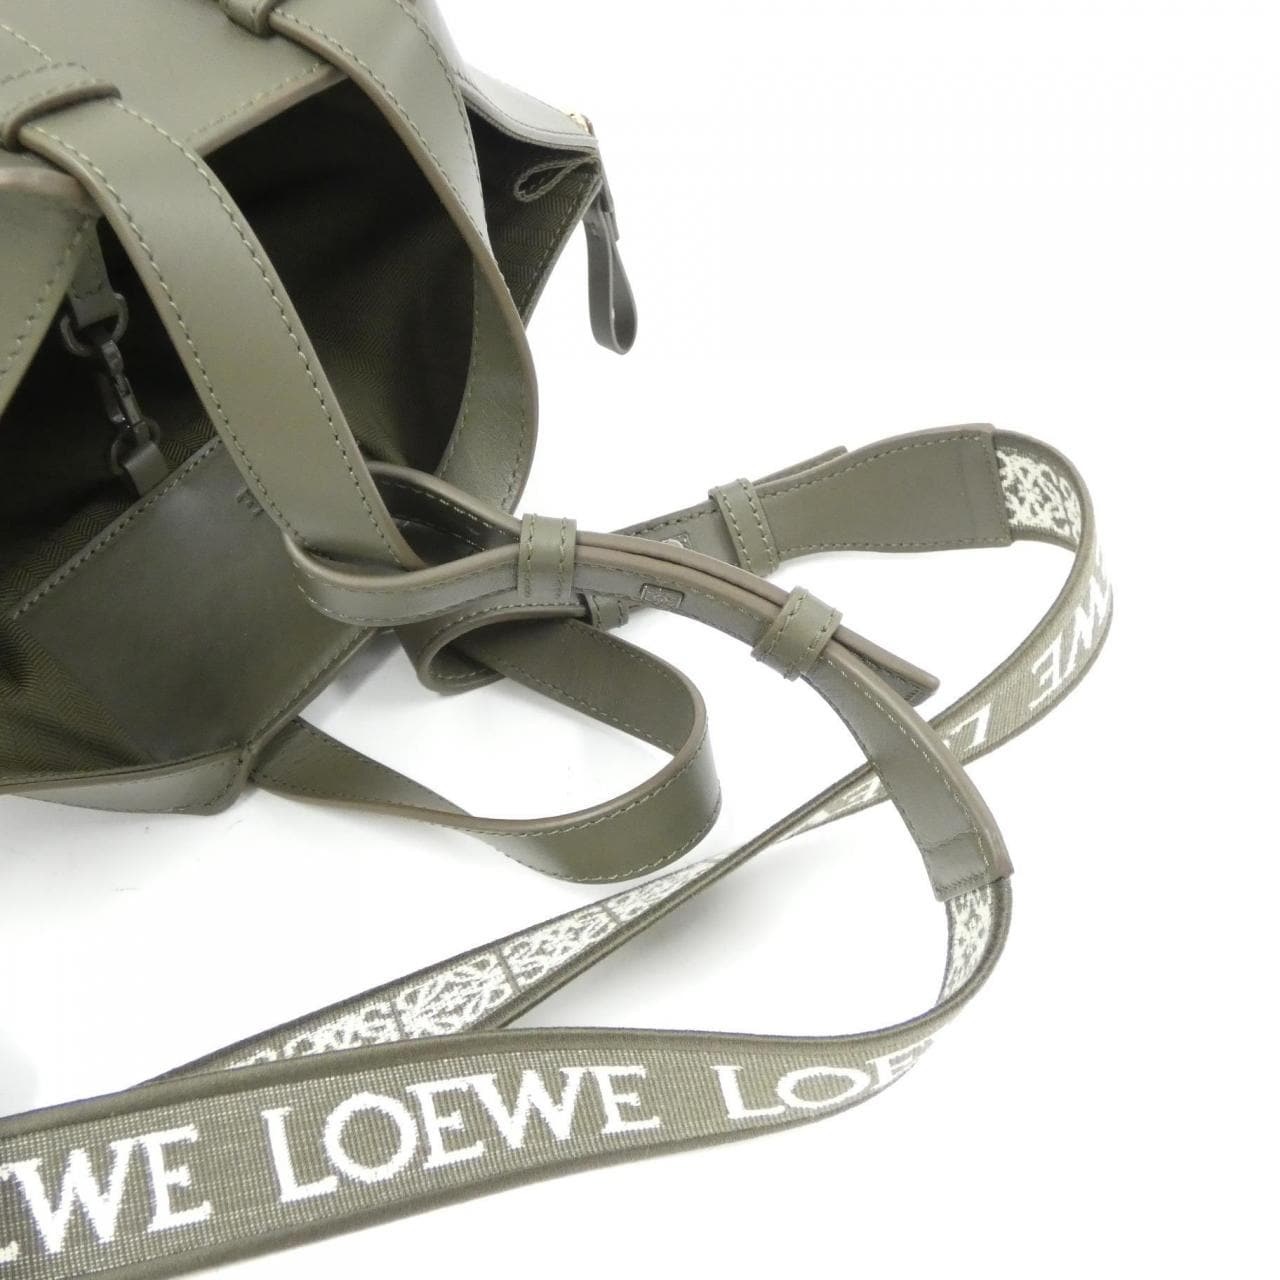 [BRAND NEW] Loewe Hammock Compact A538H13X07 Shoulder Bag